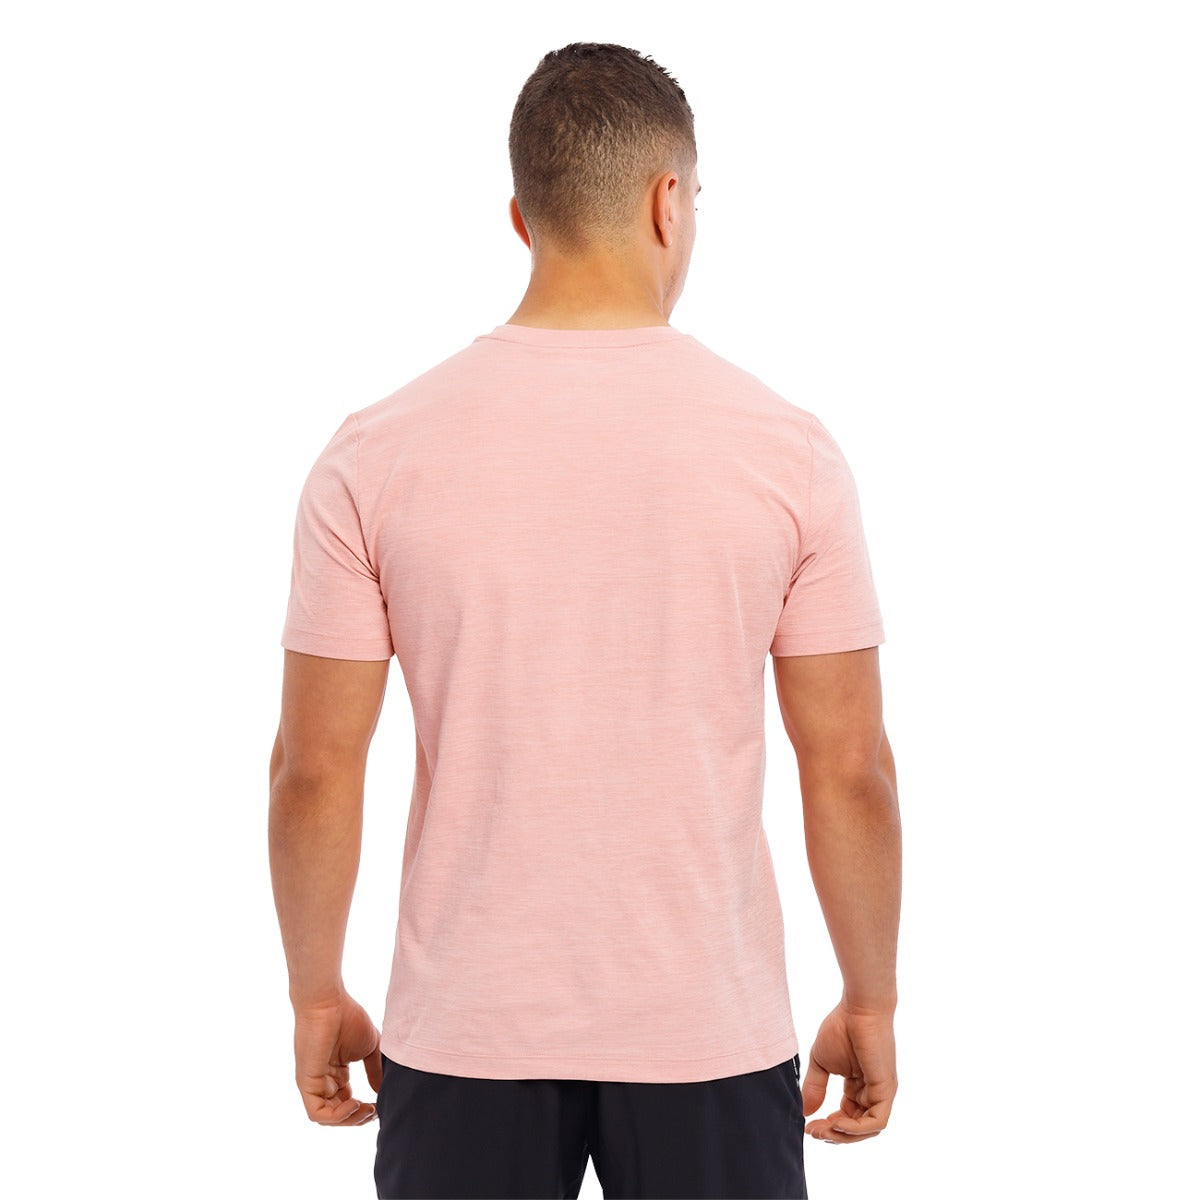 Anta Cross Training T-Shirt For Men, Pink